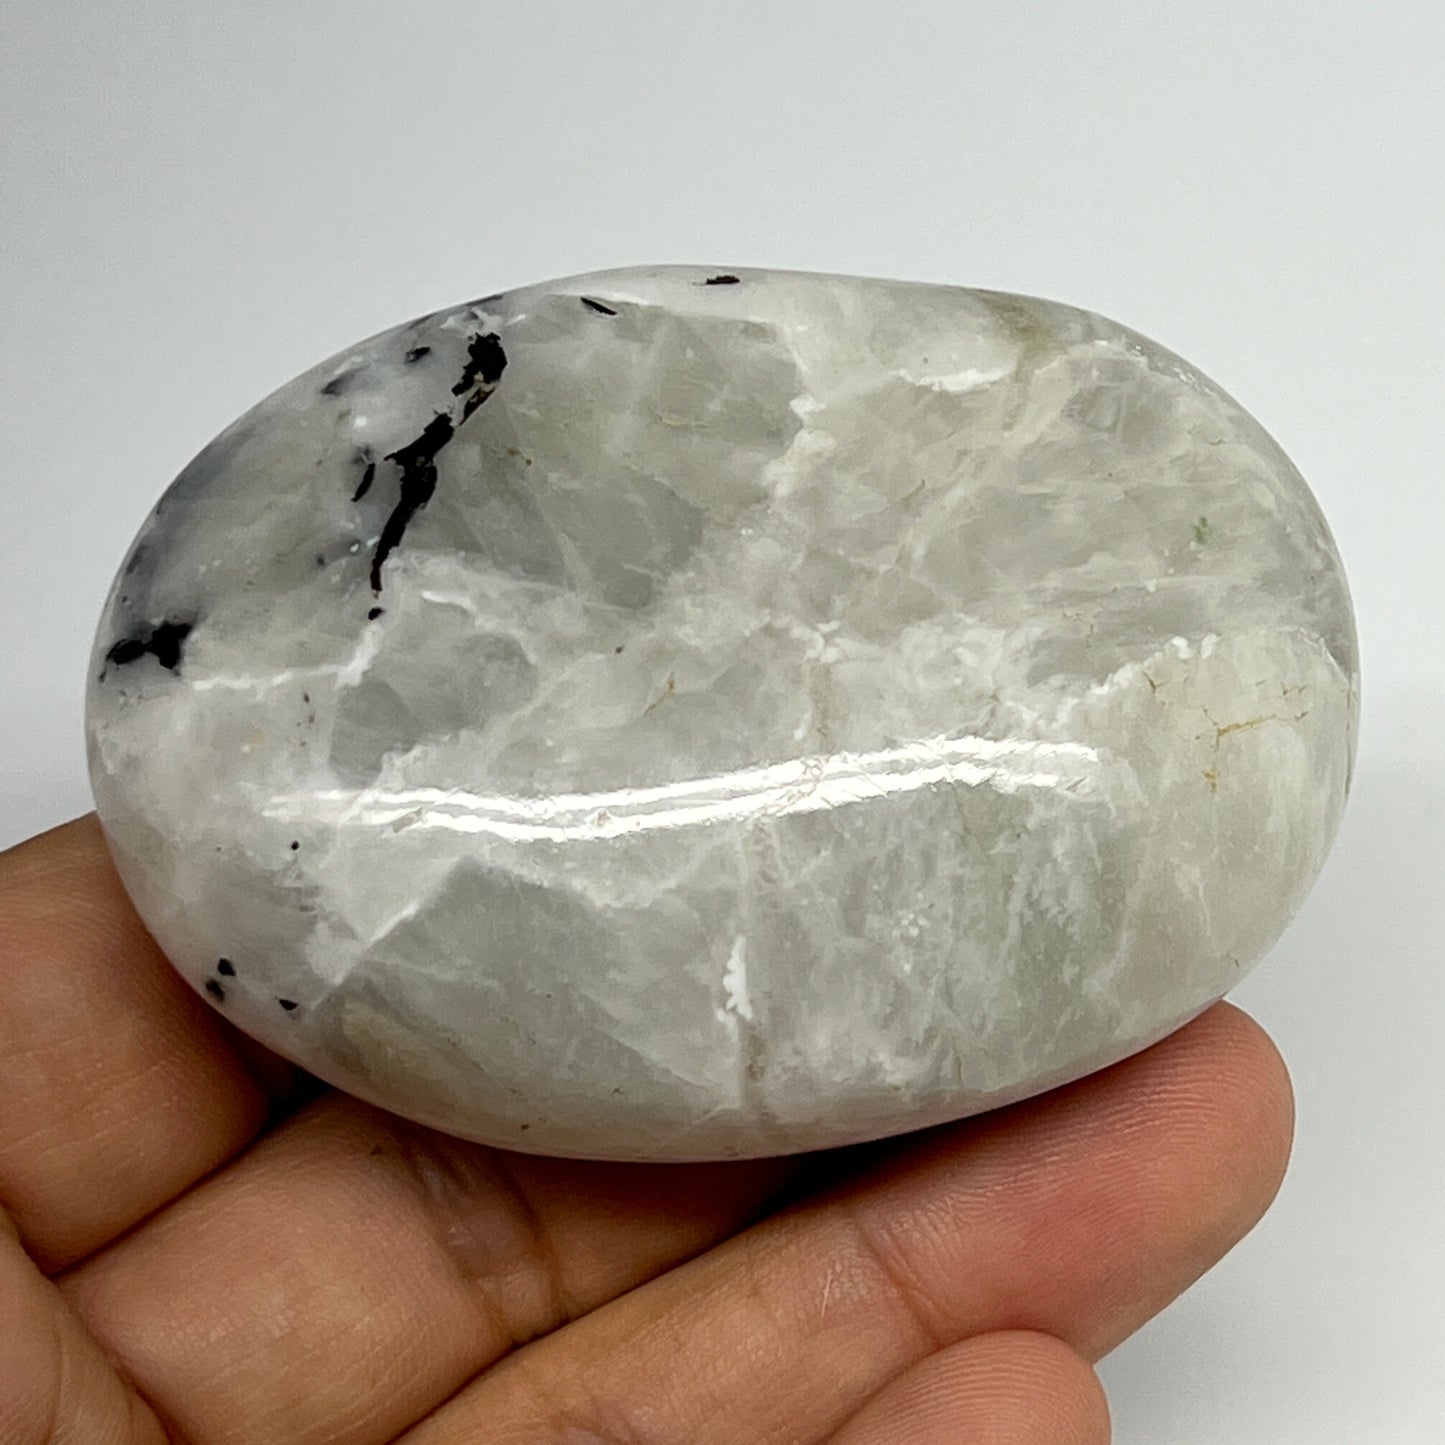 127.3g,2.6"x1.9"x1", Rainbow Moonstone Palm-Stone Polished from India, B21322